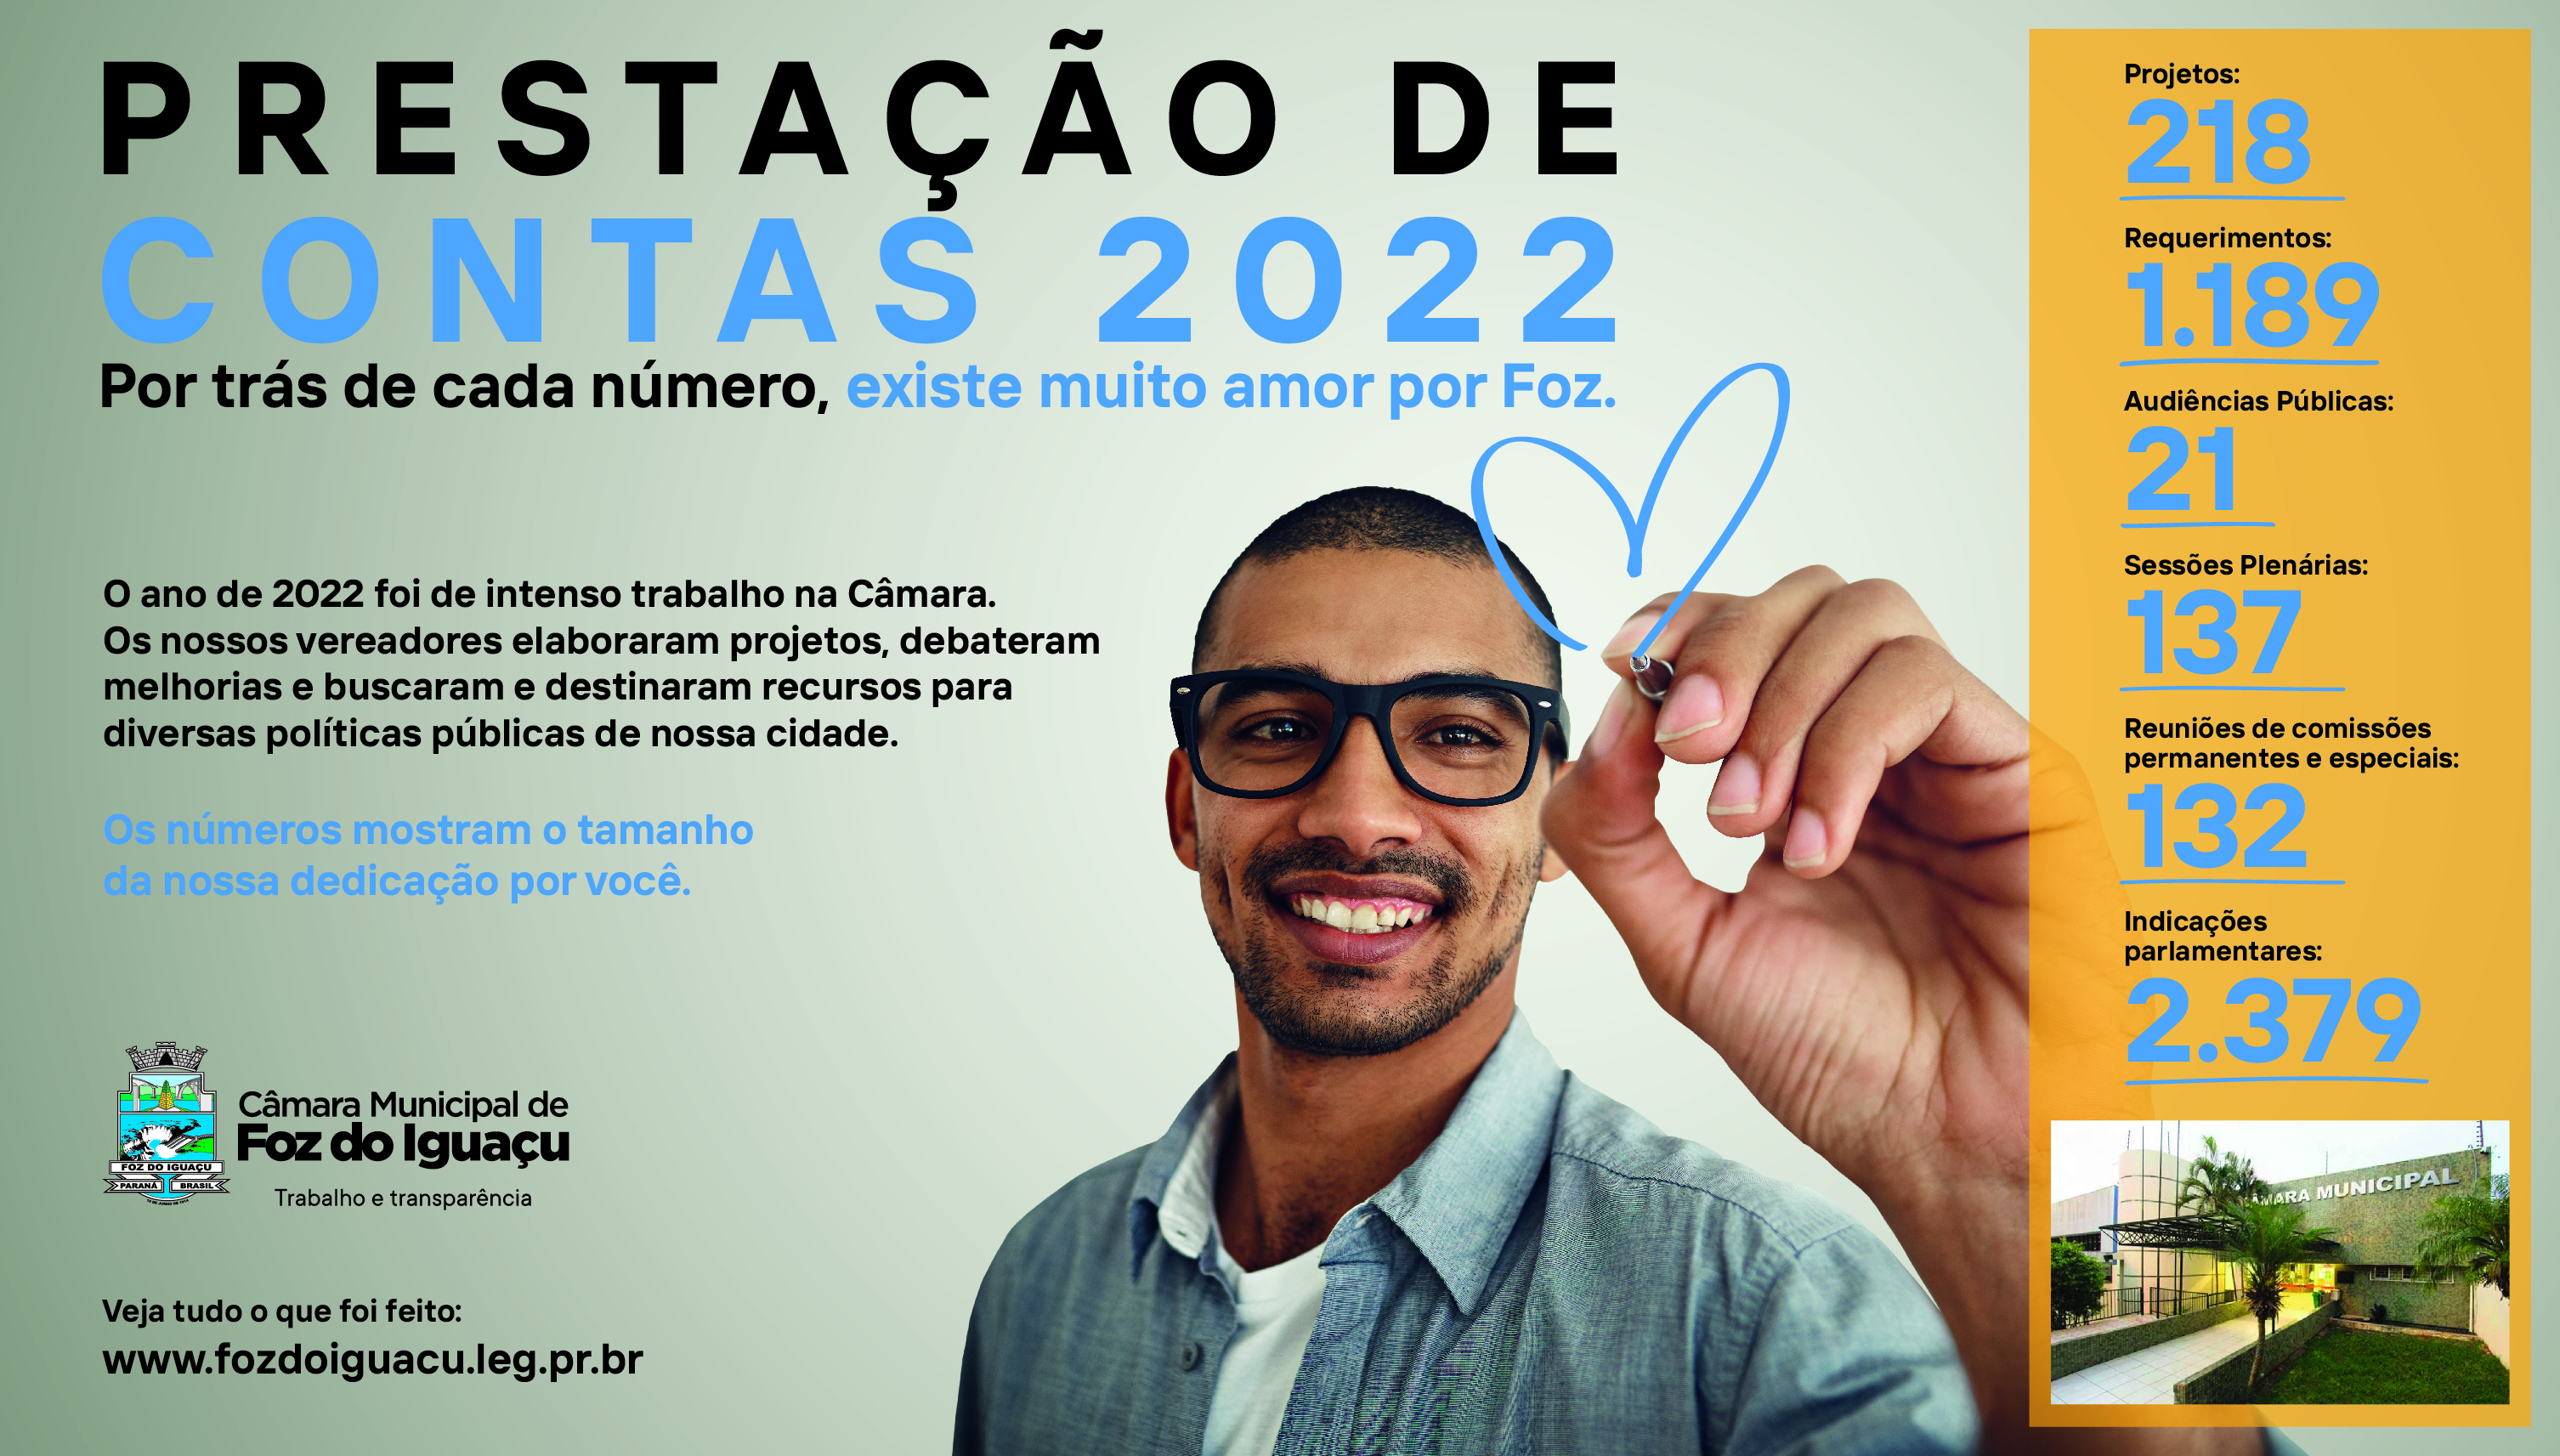 CFZ 0014 22C AN PRESTACAO DE CONTAS 2022 25.5X14.5CM-01